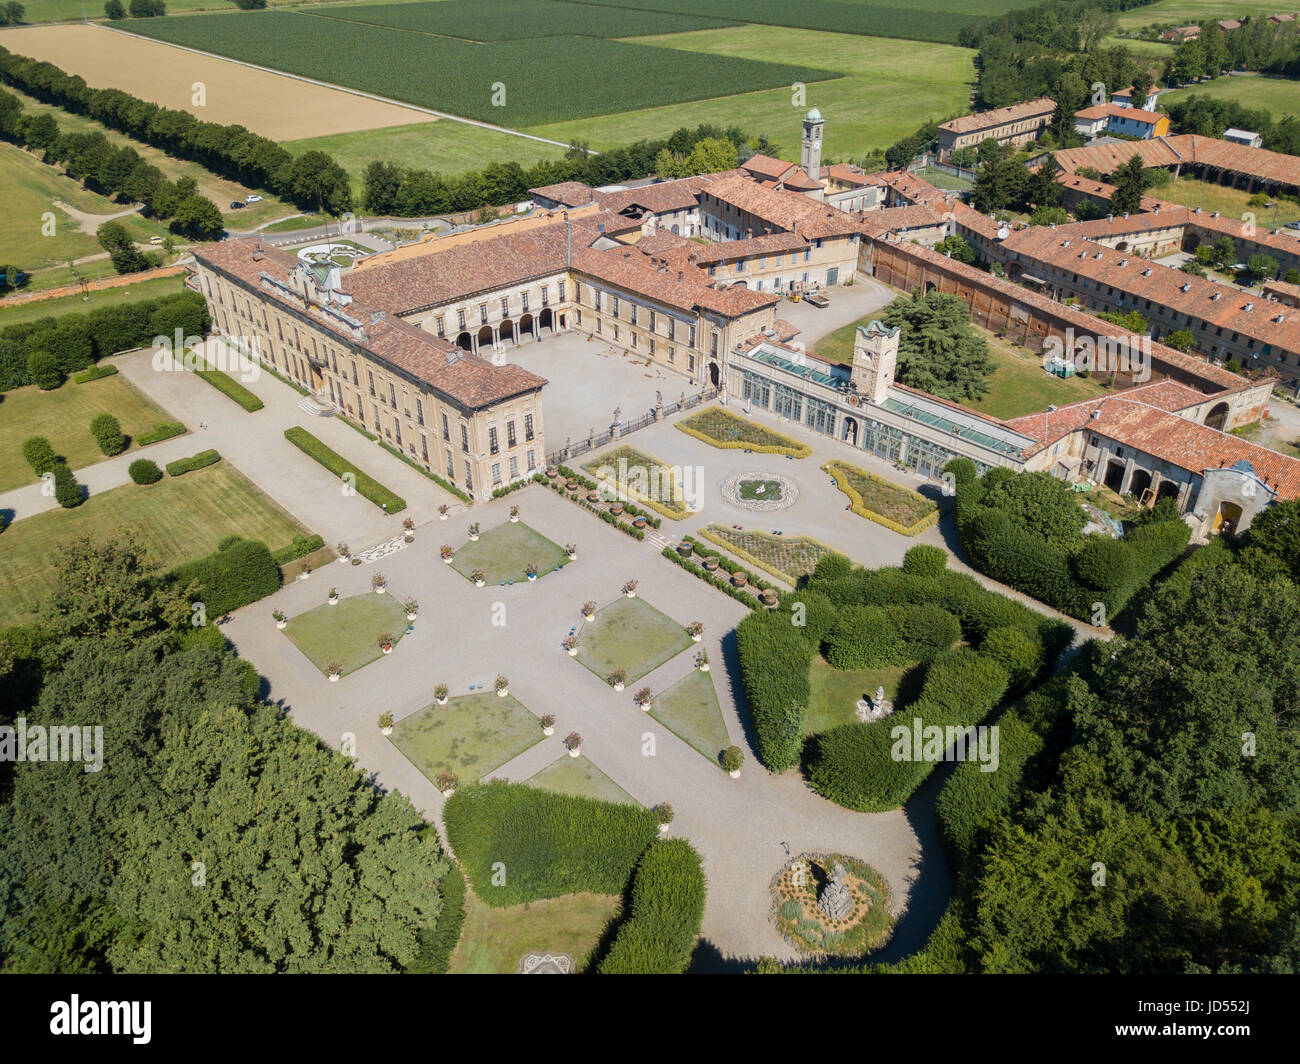 Villa Arconati, Castellazzo, Bollate, Milan, Italy. Aerial view of Villa Arconati 17/06/2017. Gardens and park, Groane Park. Palace, baroque style pal Stock Photo